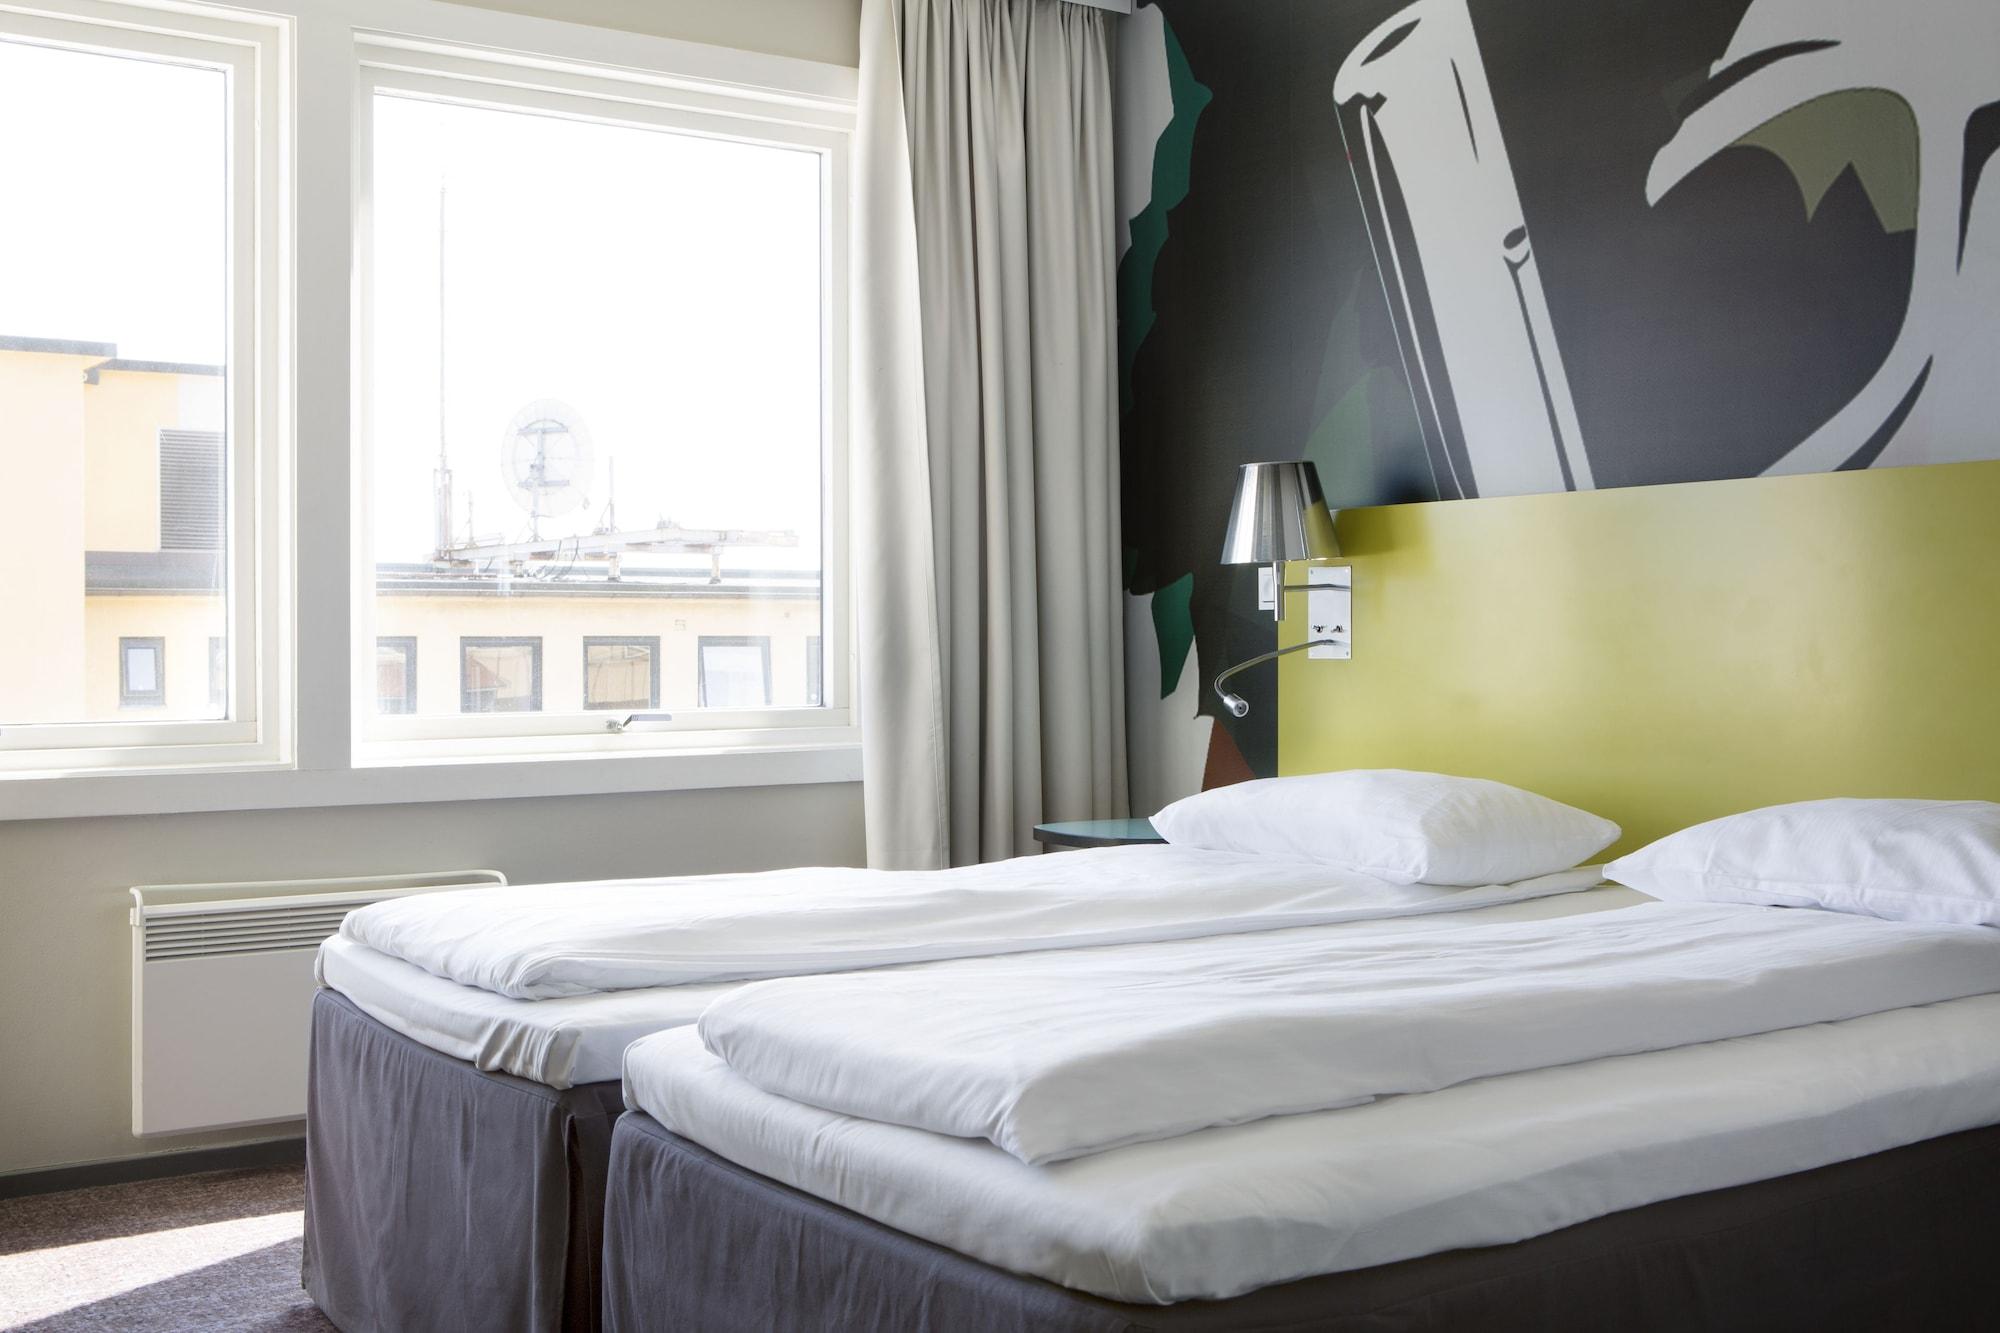 Comfort Hotel Kristiansand Exterior photo